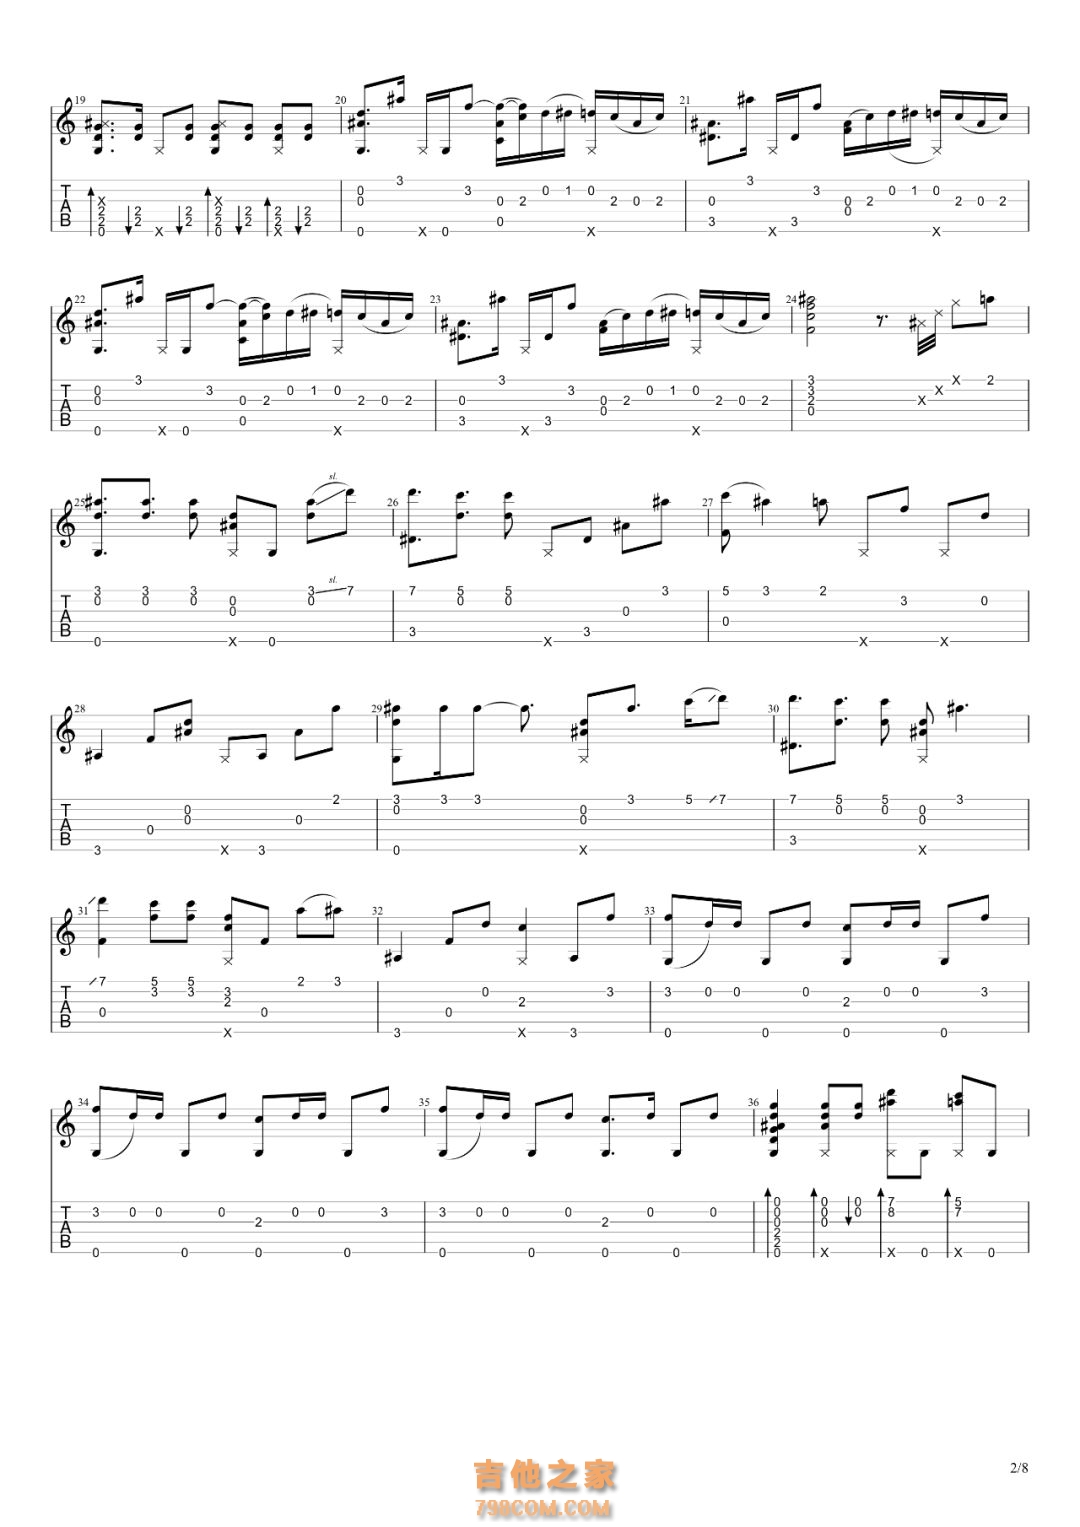 《Unravel》吉他简谱入门版 - 初学者C调和弦谱(弹唱谱) - 吉他简谱